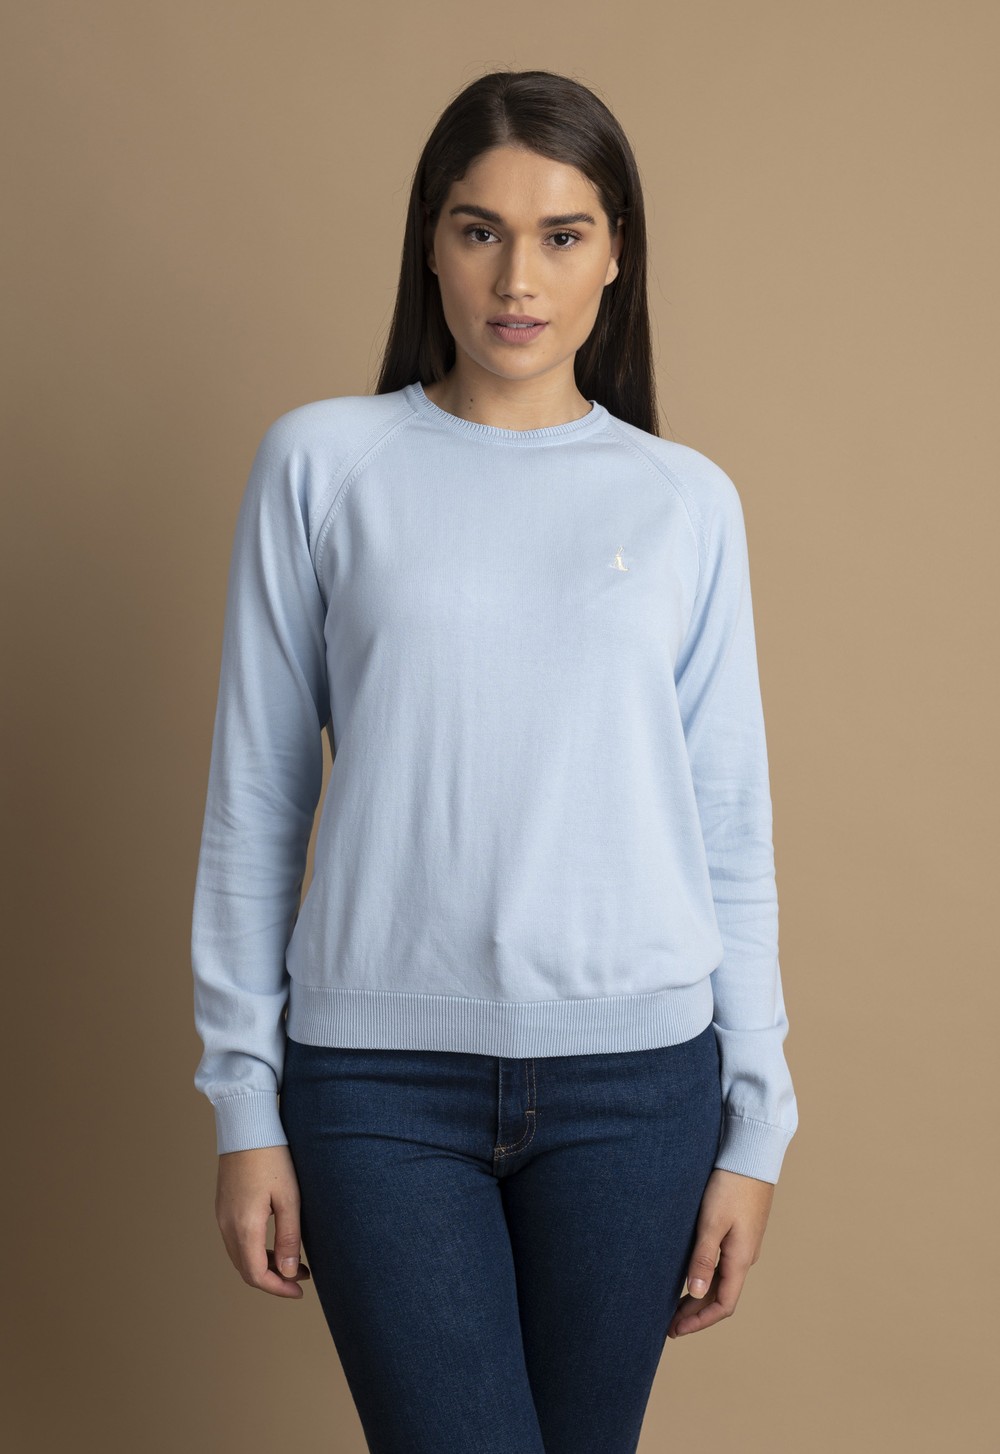 Sweater Feminino Barcelona Gola U 015450 Azul Claro